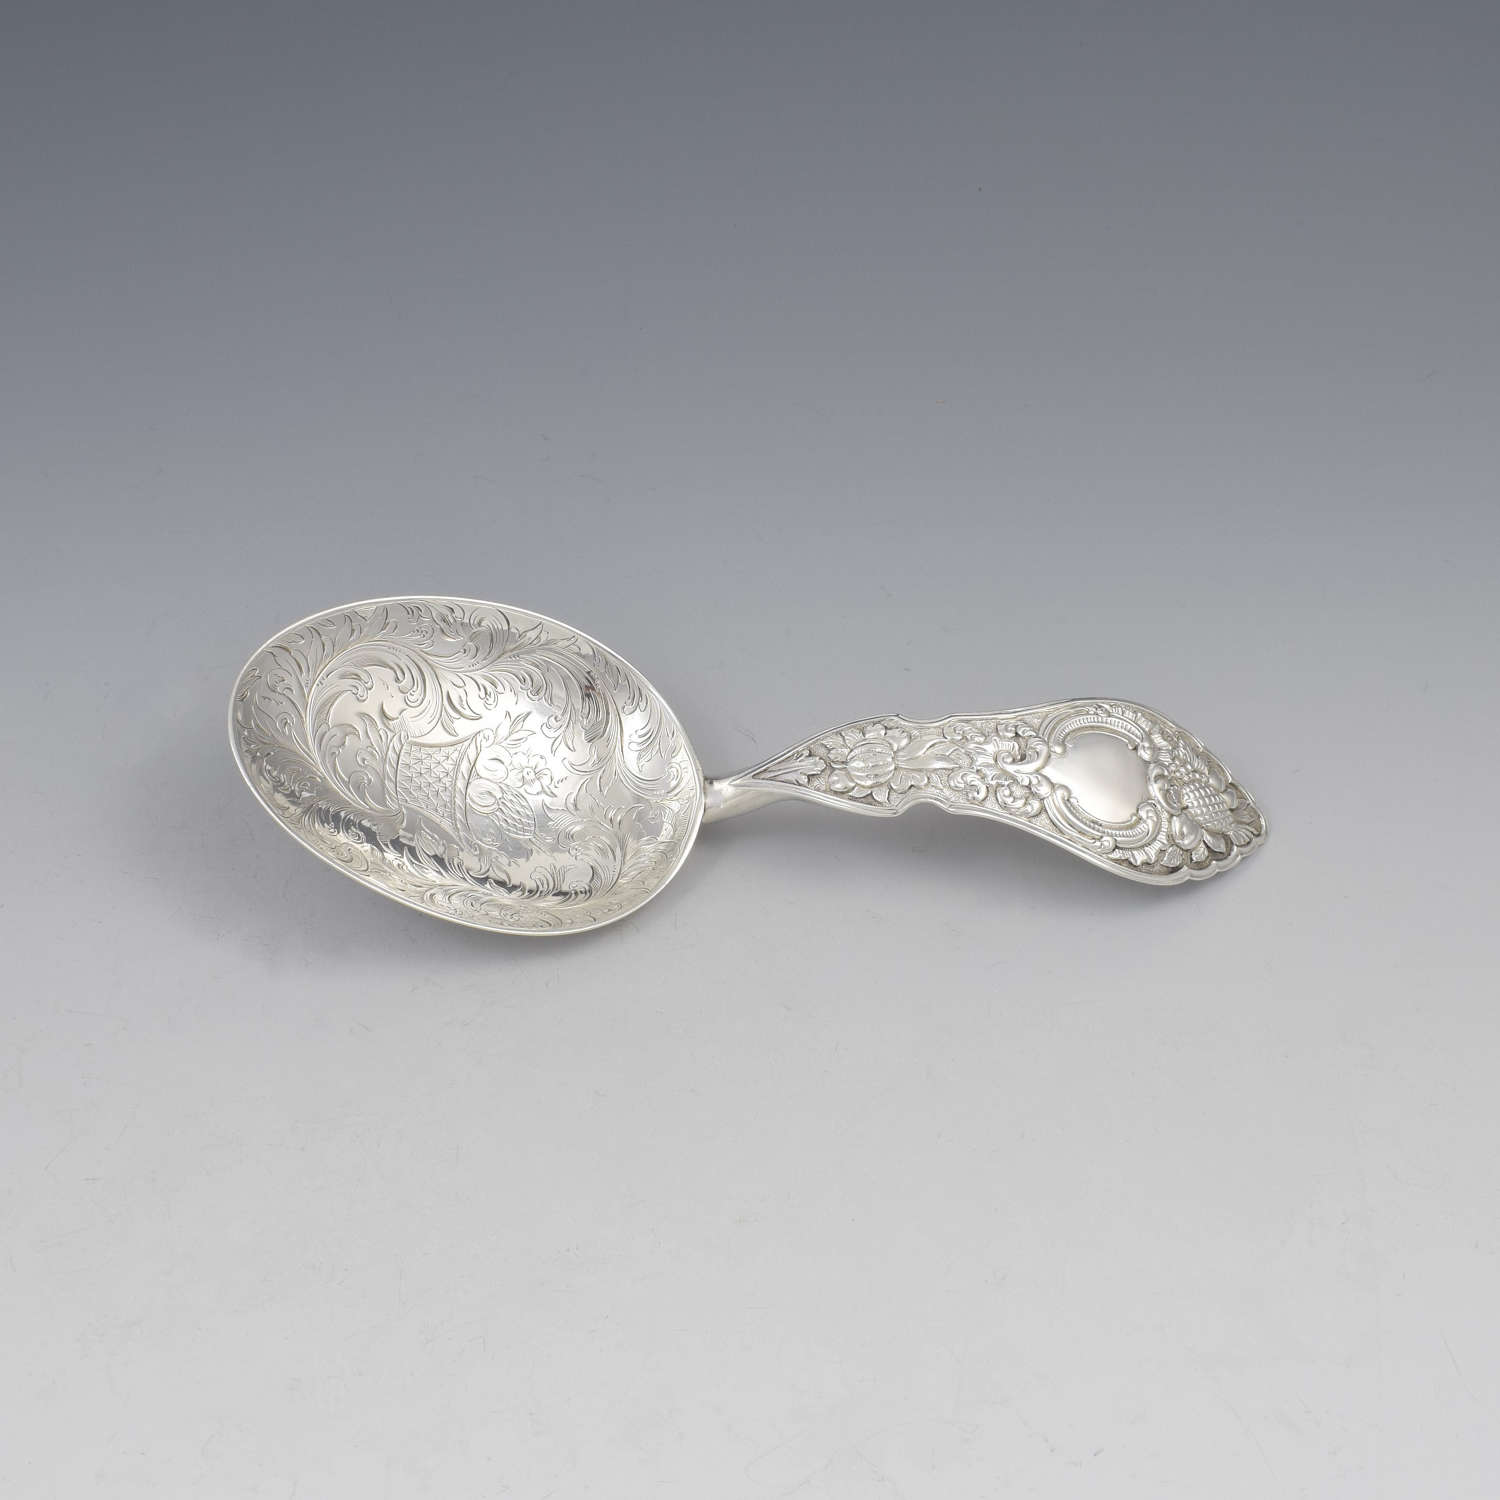 Unusual Silver Fruit Serving Spoon / Ladle Elizabeth Eaton 1853